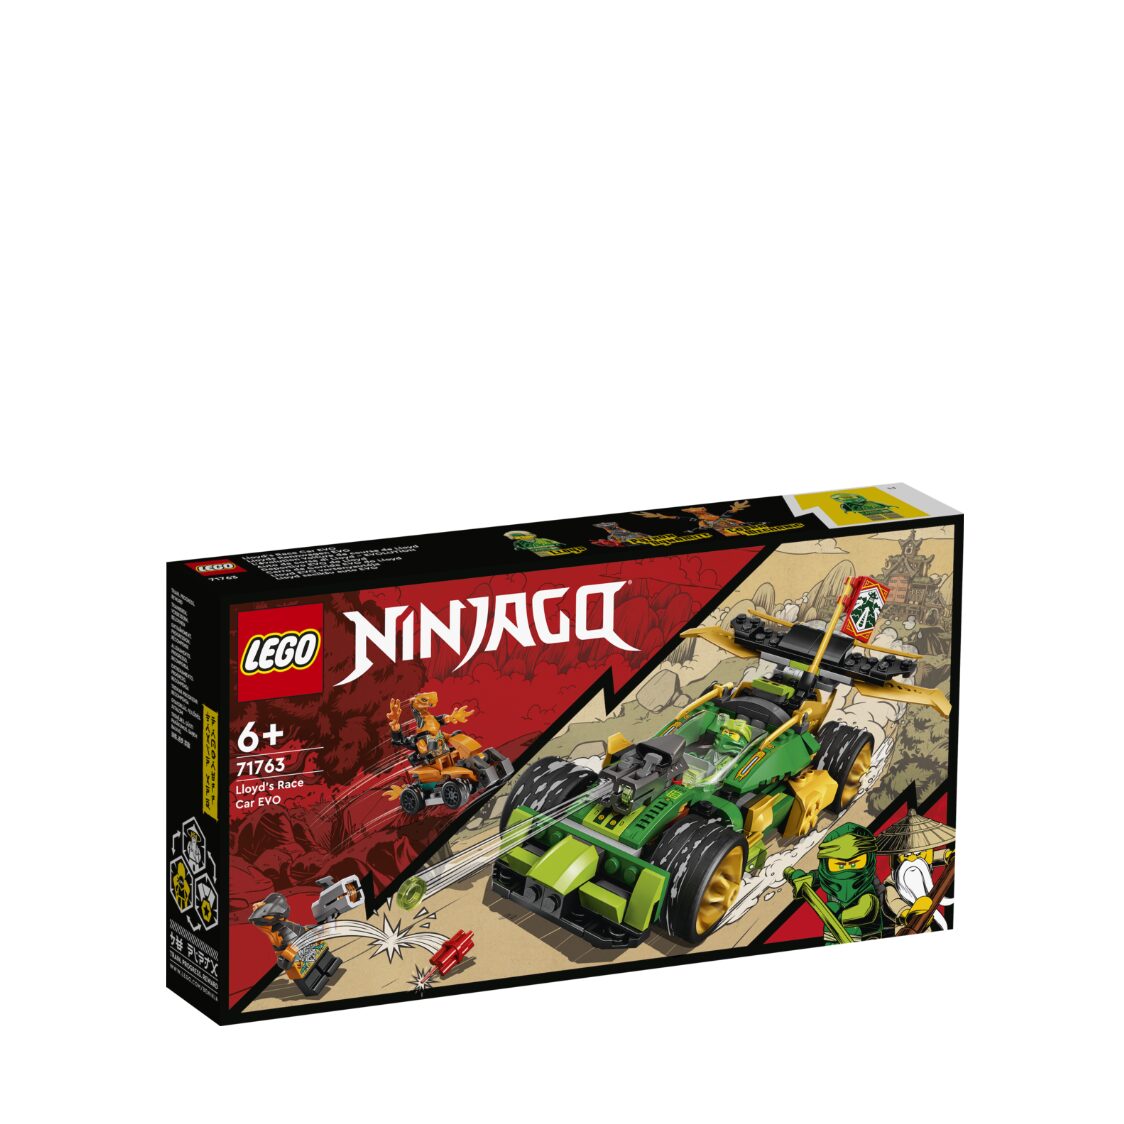 LEGO 71763 Ninjago Lloyds Race Car EVO